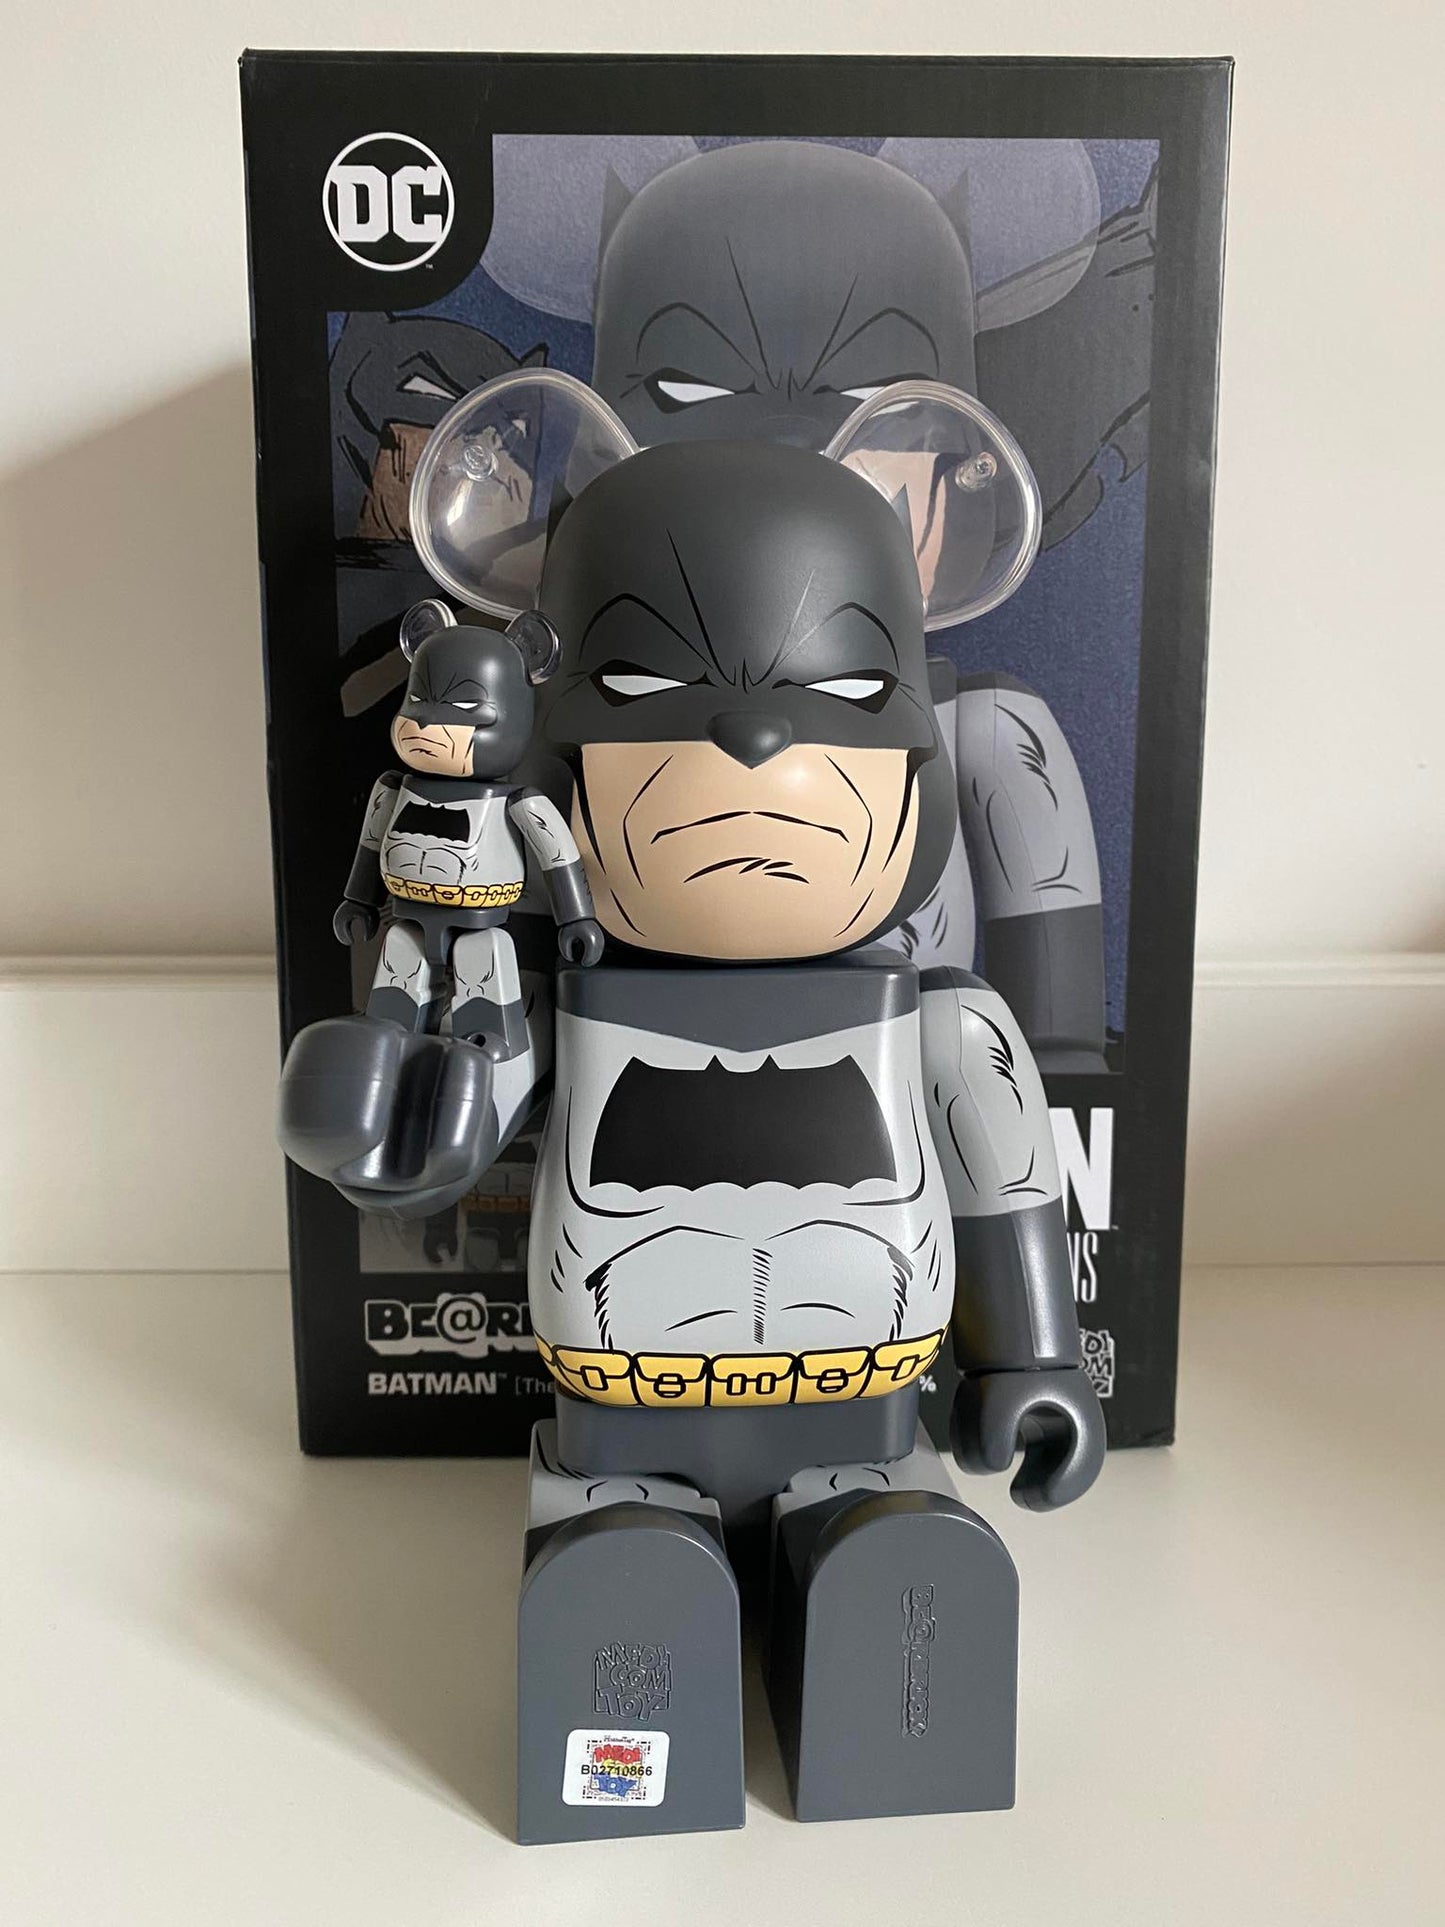 Medicom Speelgoed Bearbrick Batman The Dark Knight keert terug 400% en 100%